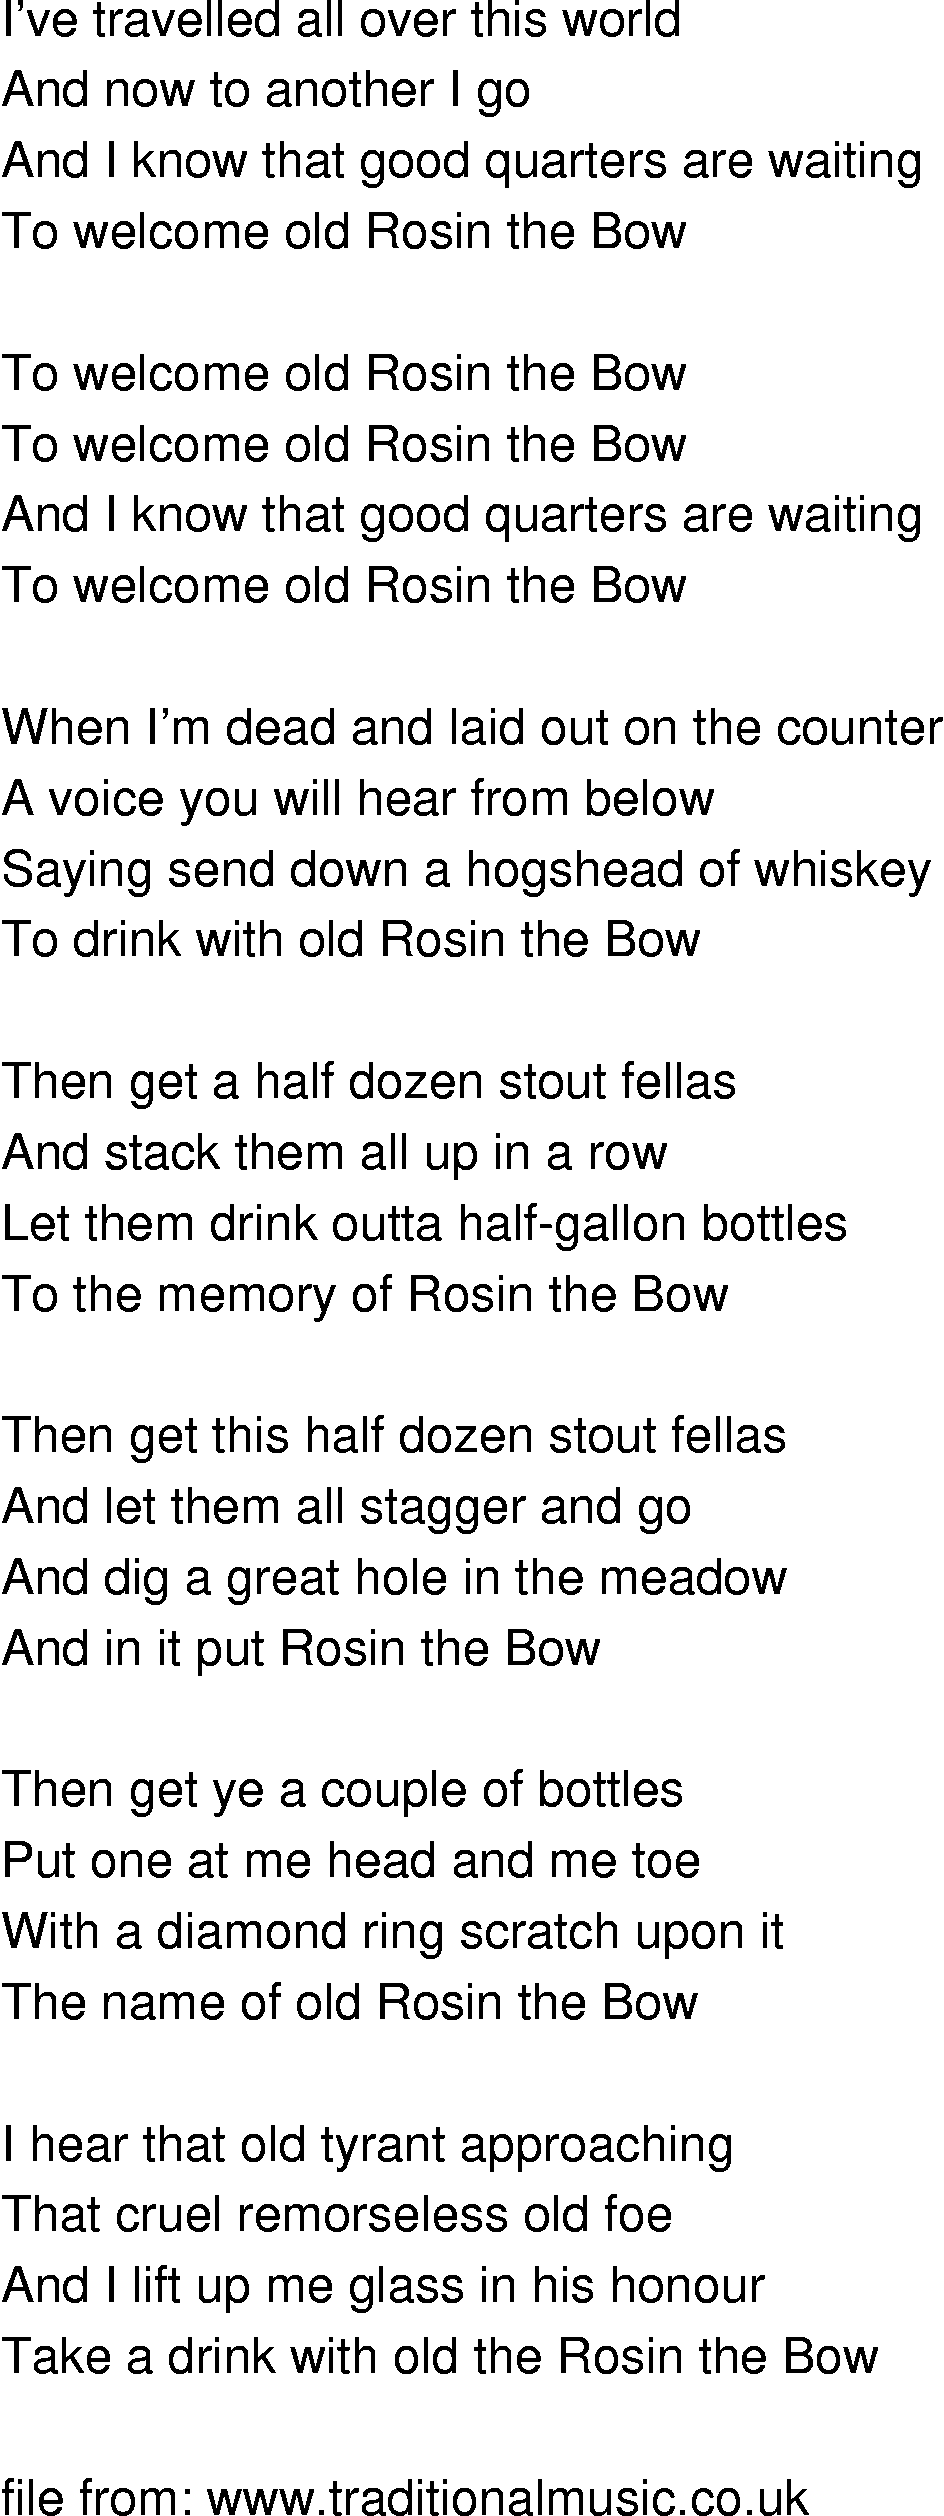 Old-Time (oldtimey) Song Lyrics - rosin the bow